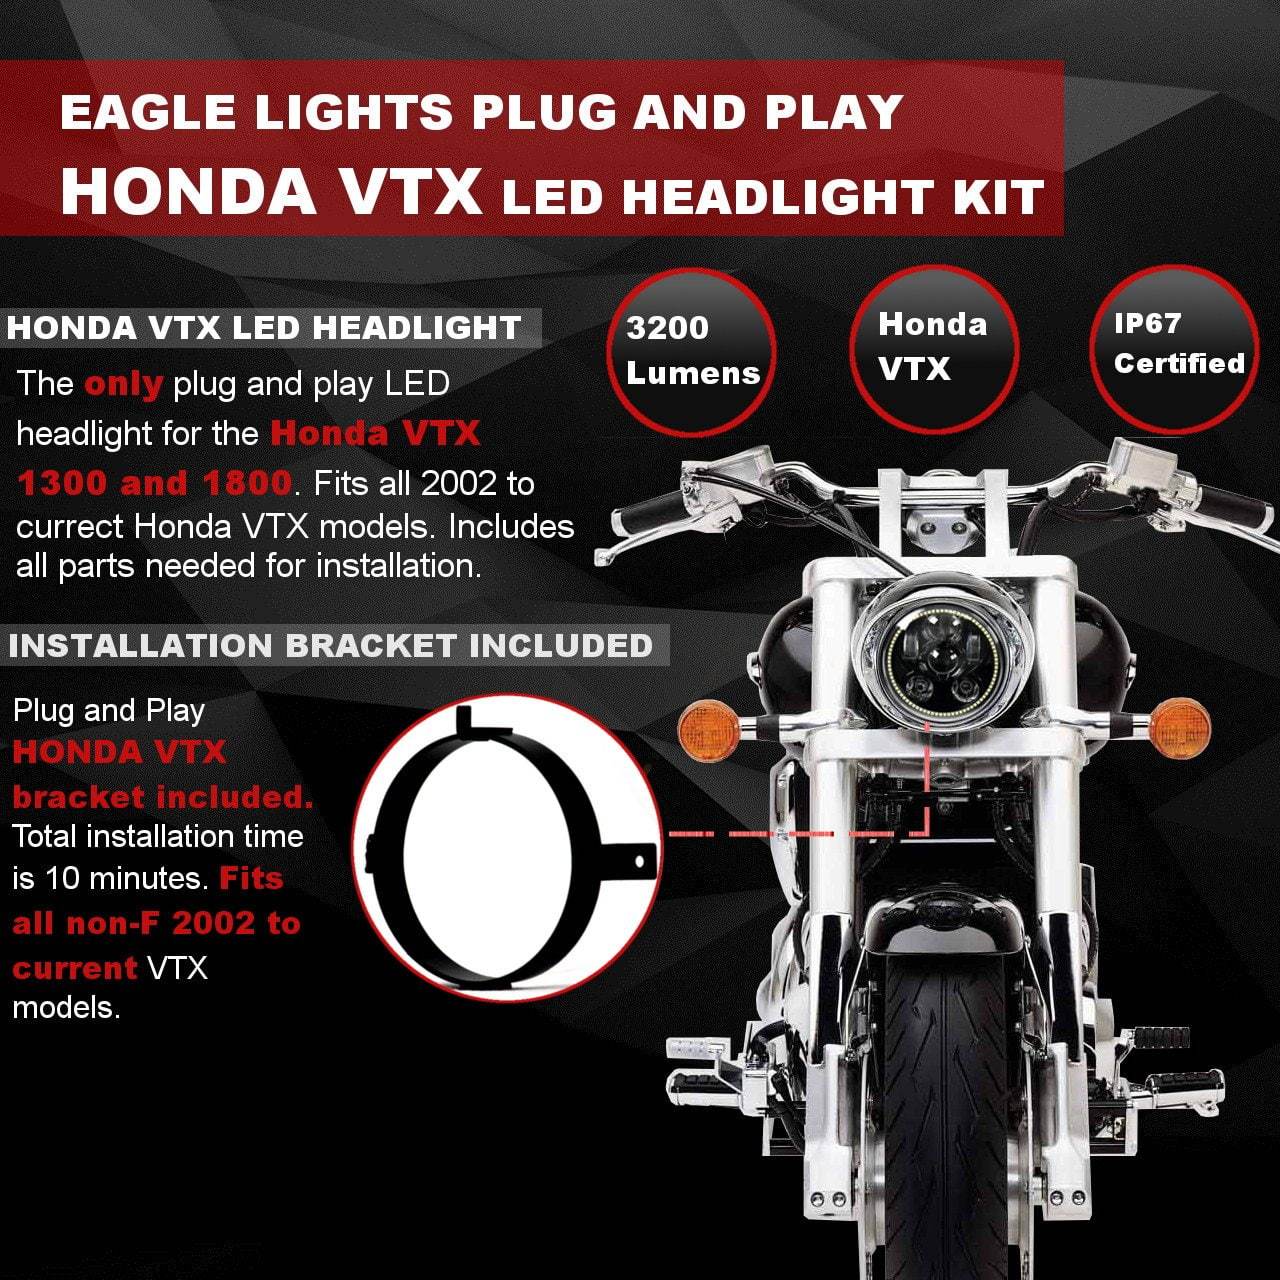 Honda VTX LED Headlights - Eagle Lights Generation III LED Headlight With Halo Ring For Honda VTX - Includes VTX Bracket And Hardware